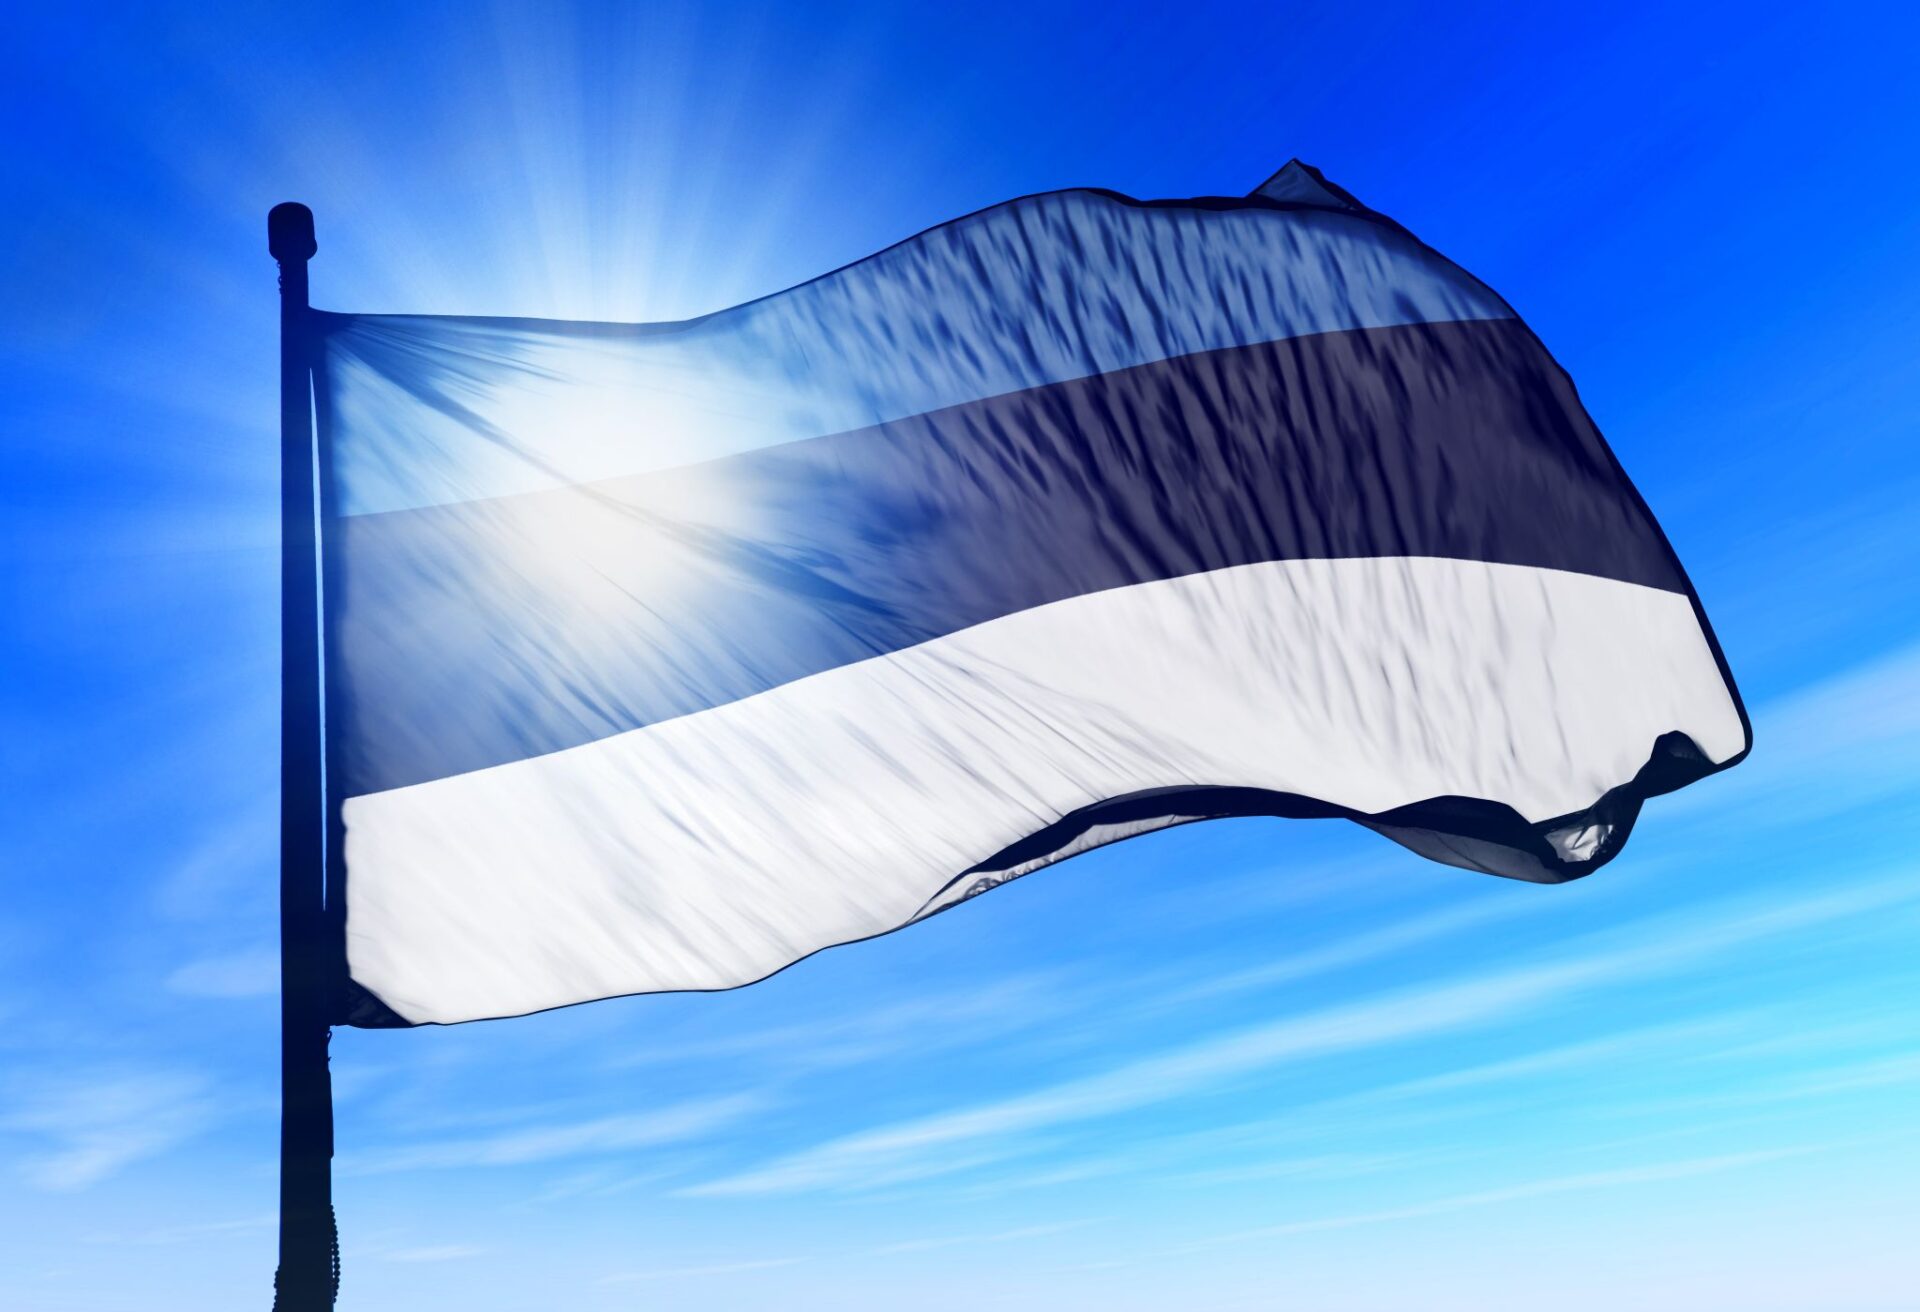 Eesti lipp on sinimustvalge